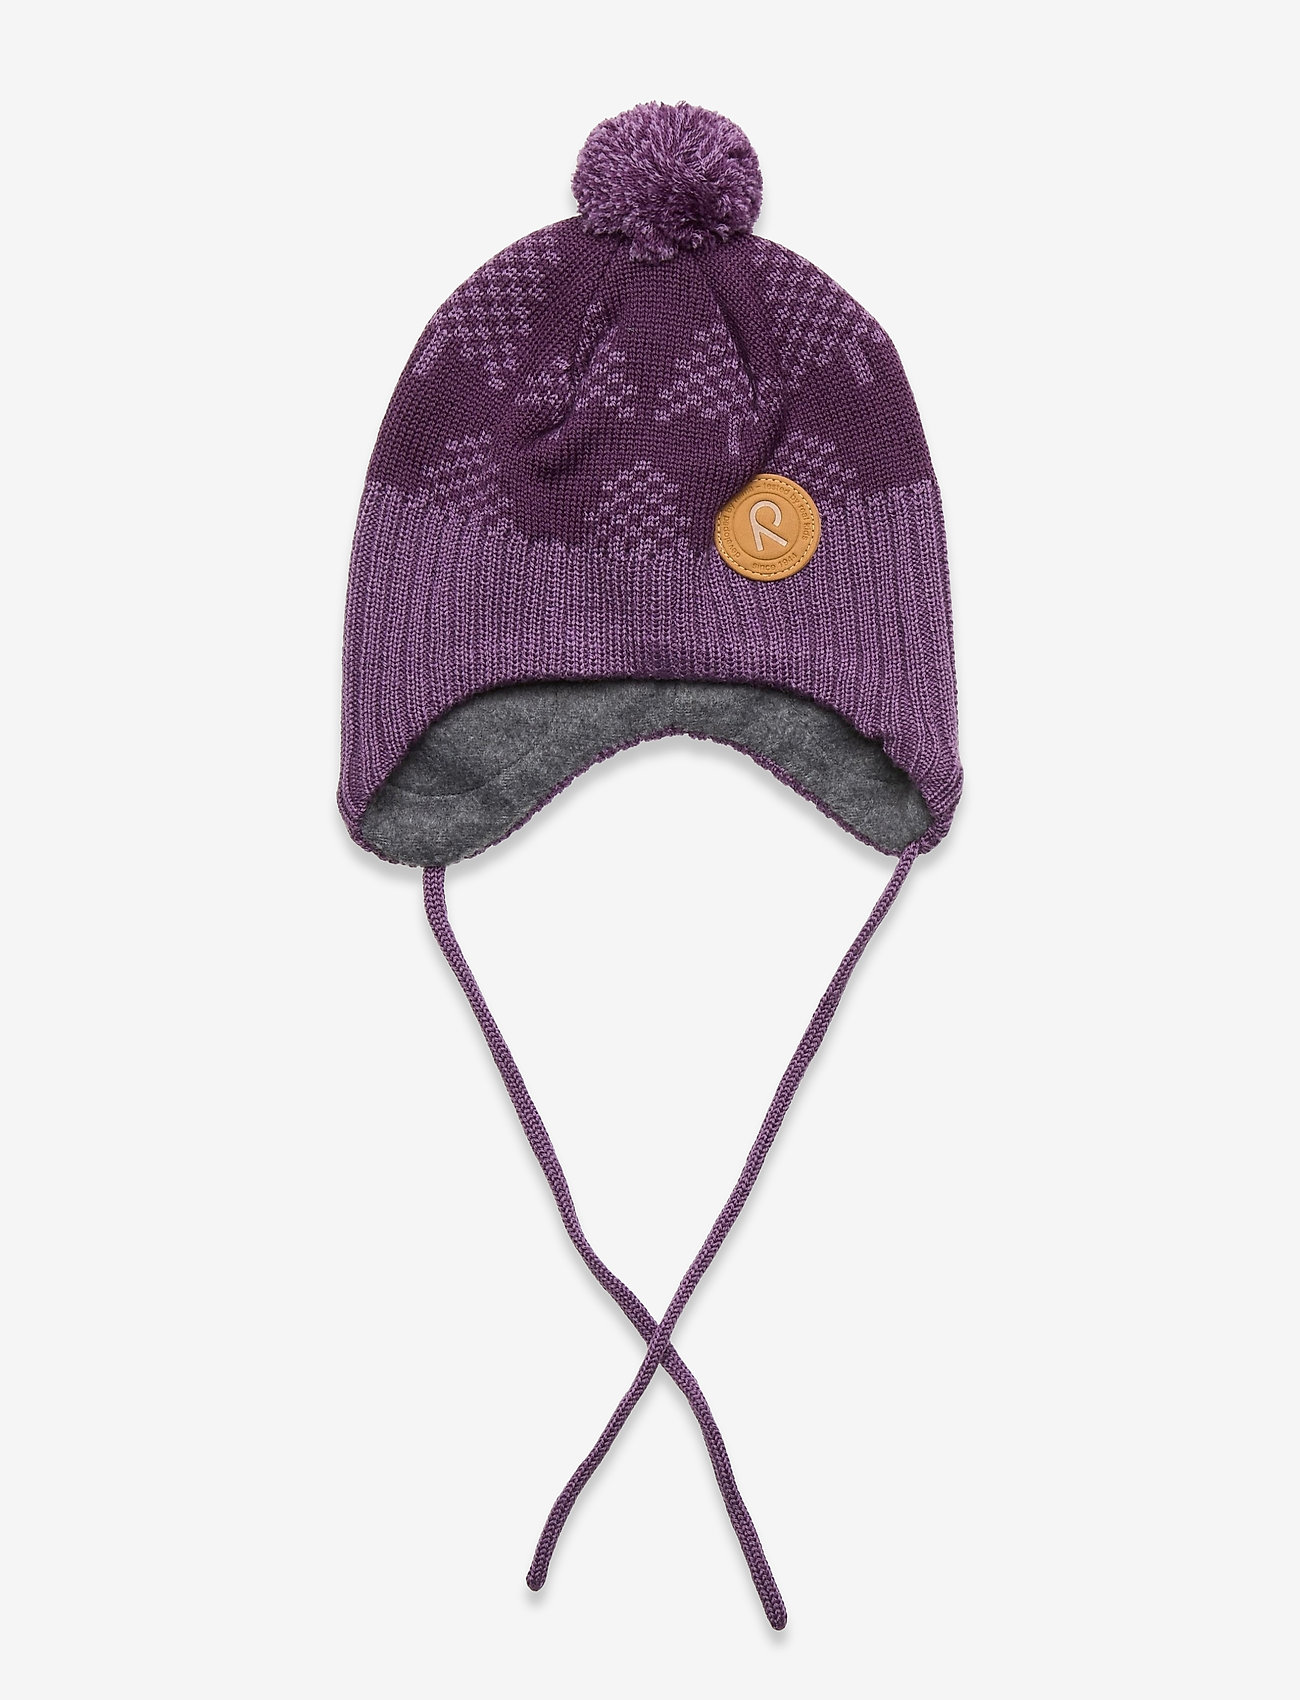 Reima - Beanie, Ylläs Deep violet,46 cm - winter hats - deep violet - 0